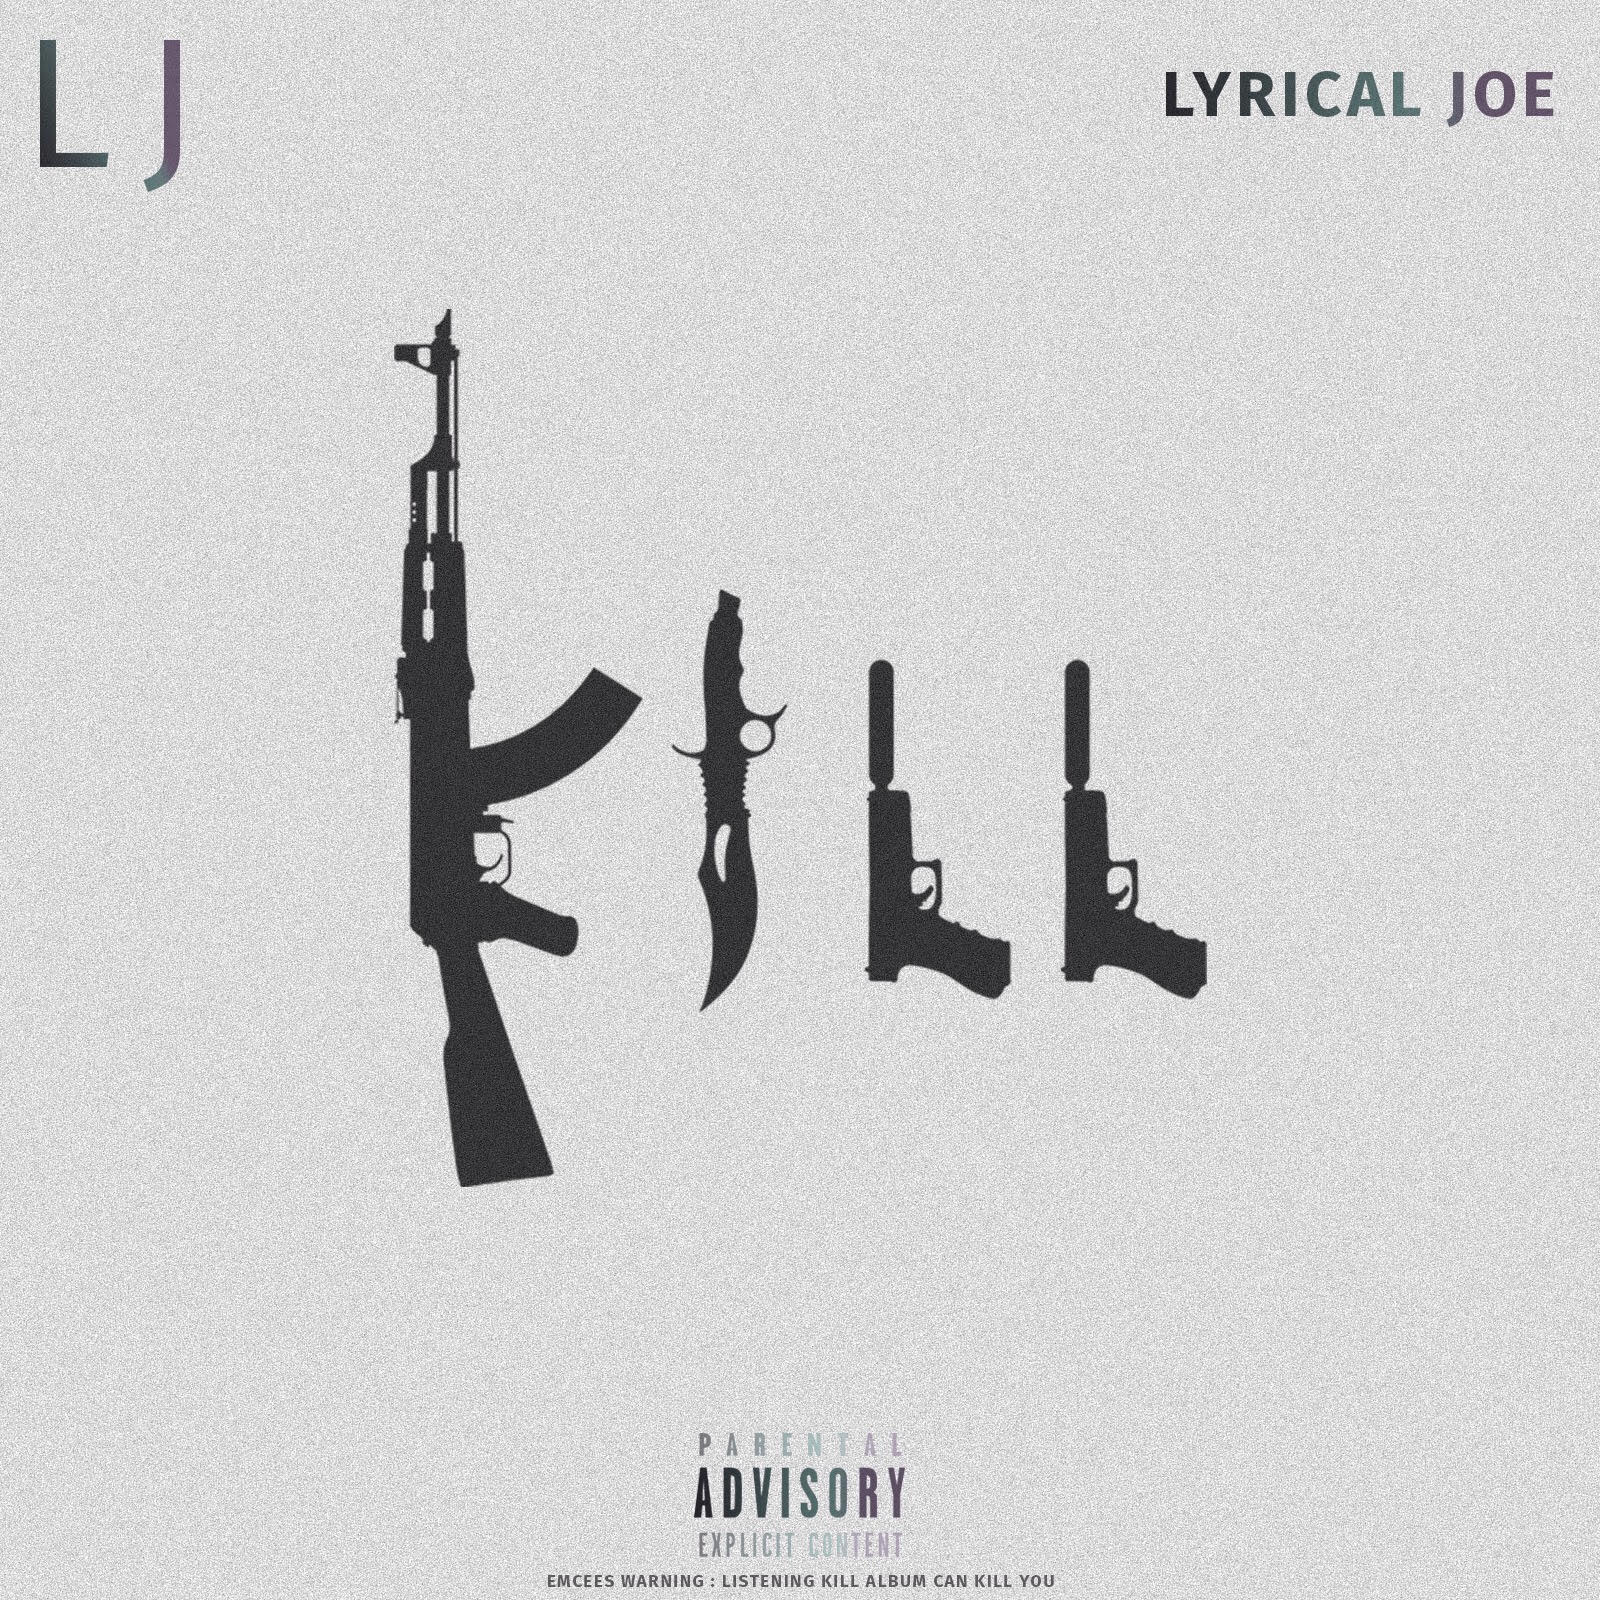 KILL by Lyrical Joe (LJ)